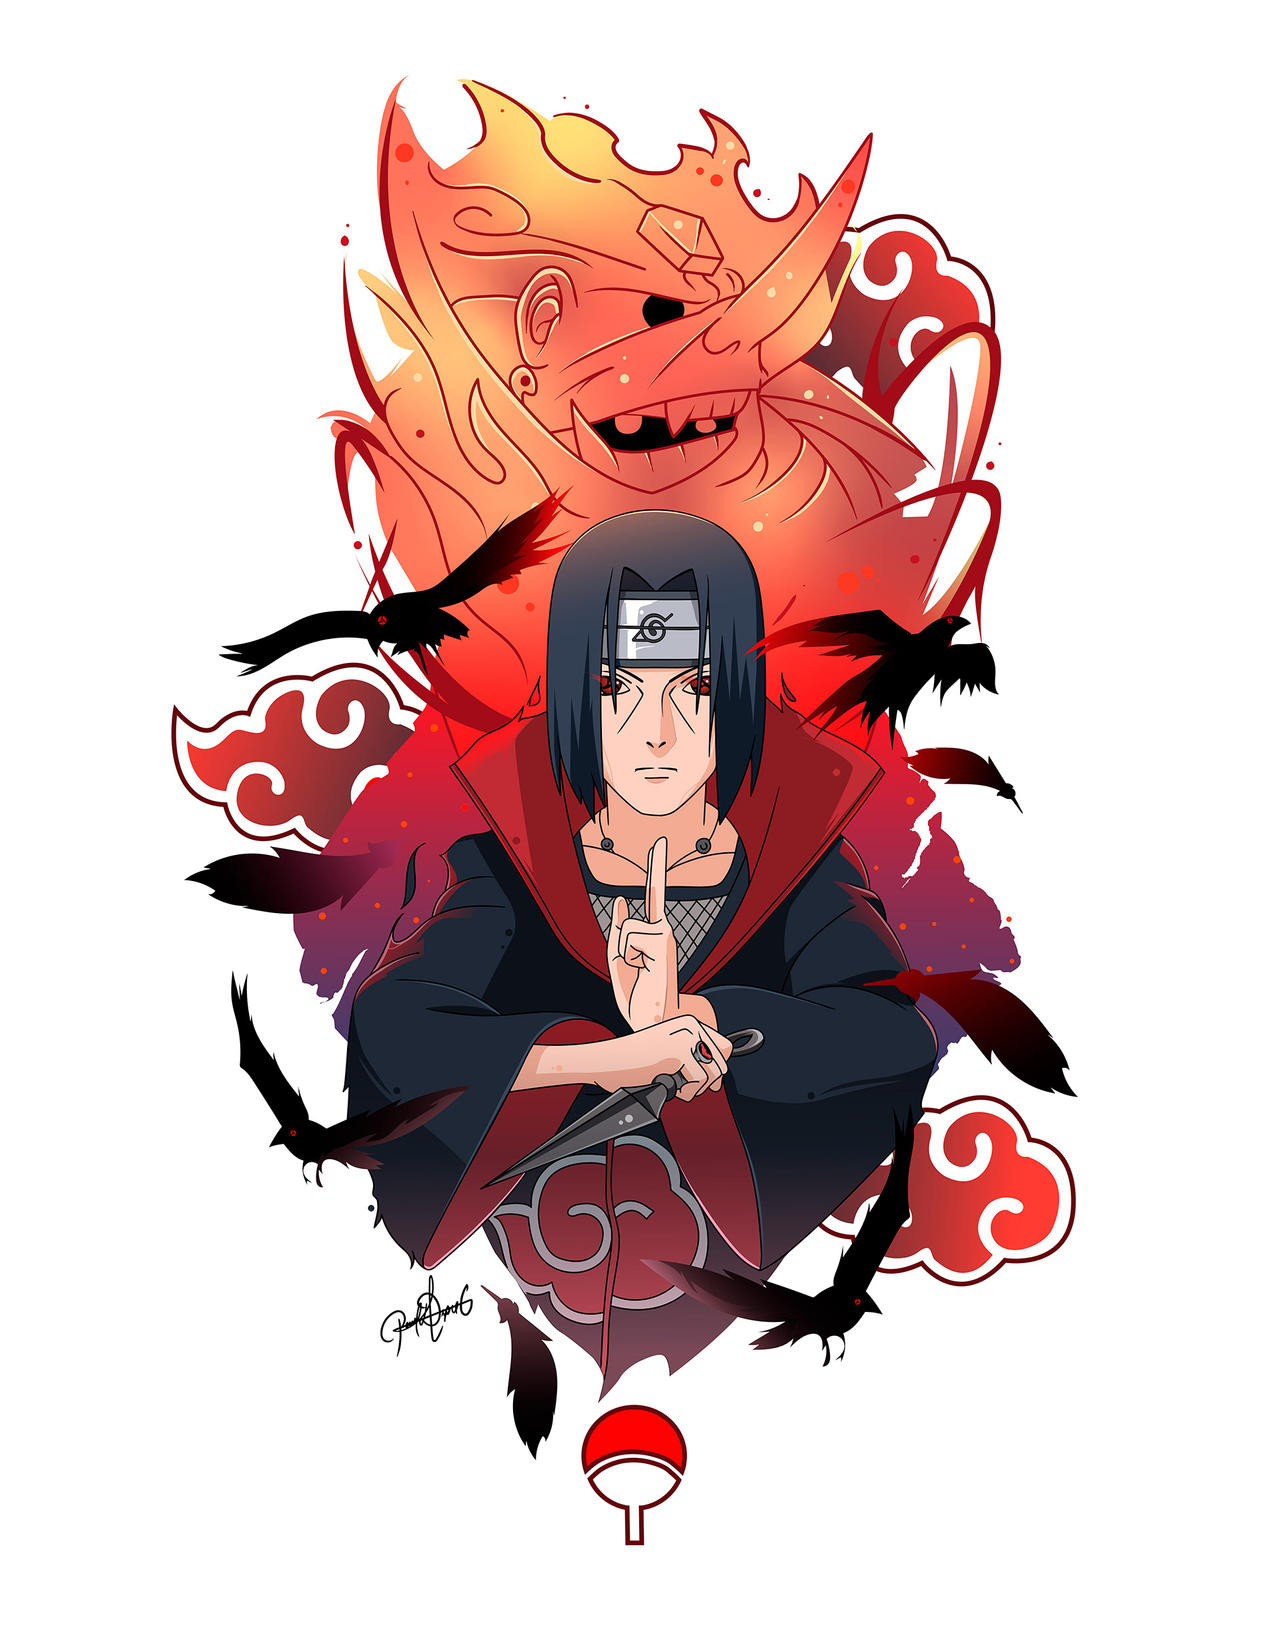 Cool Anime Drawings Naruto by VaskezJr on DeviantArt